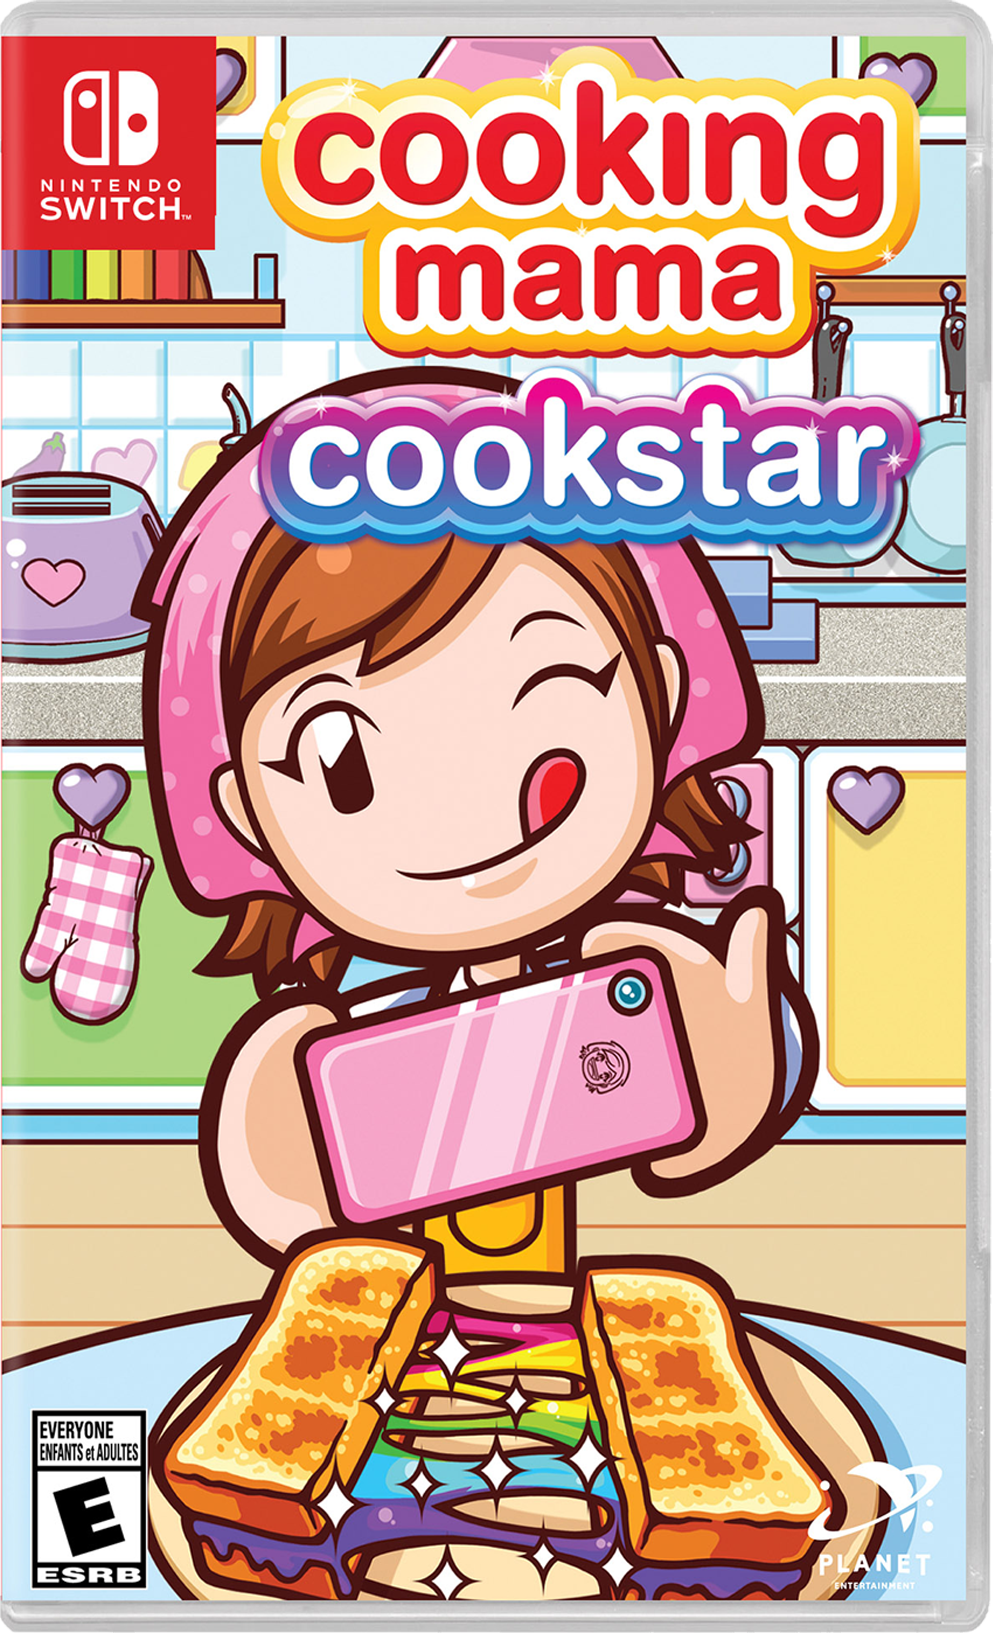 Cooking Mama: Cookstar | Cooking Mama Wiki | Fandom